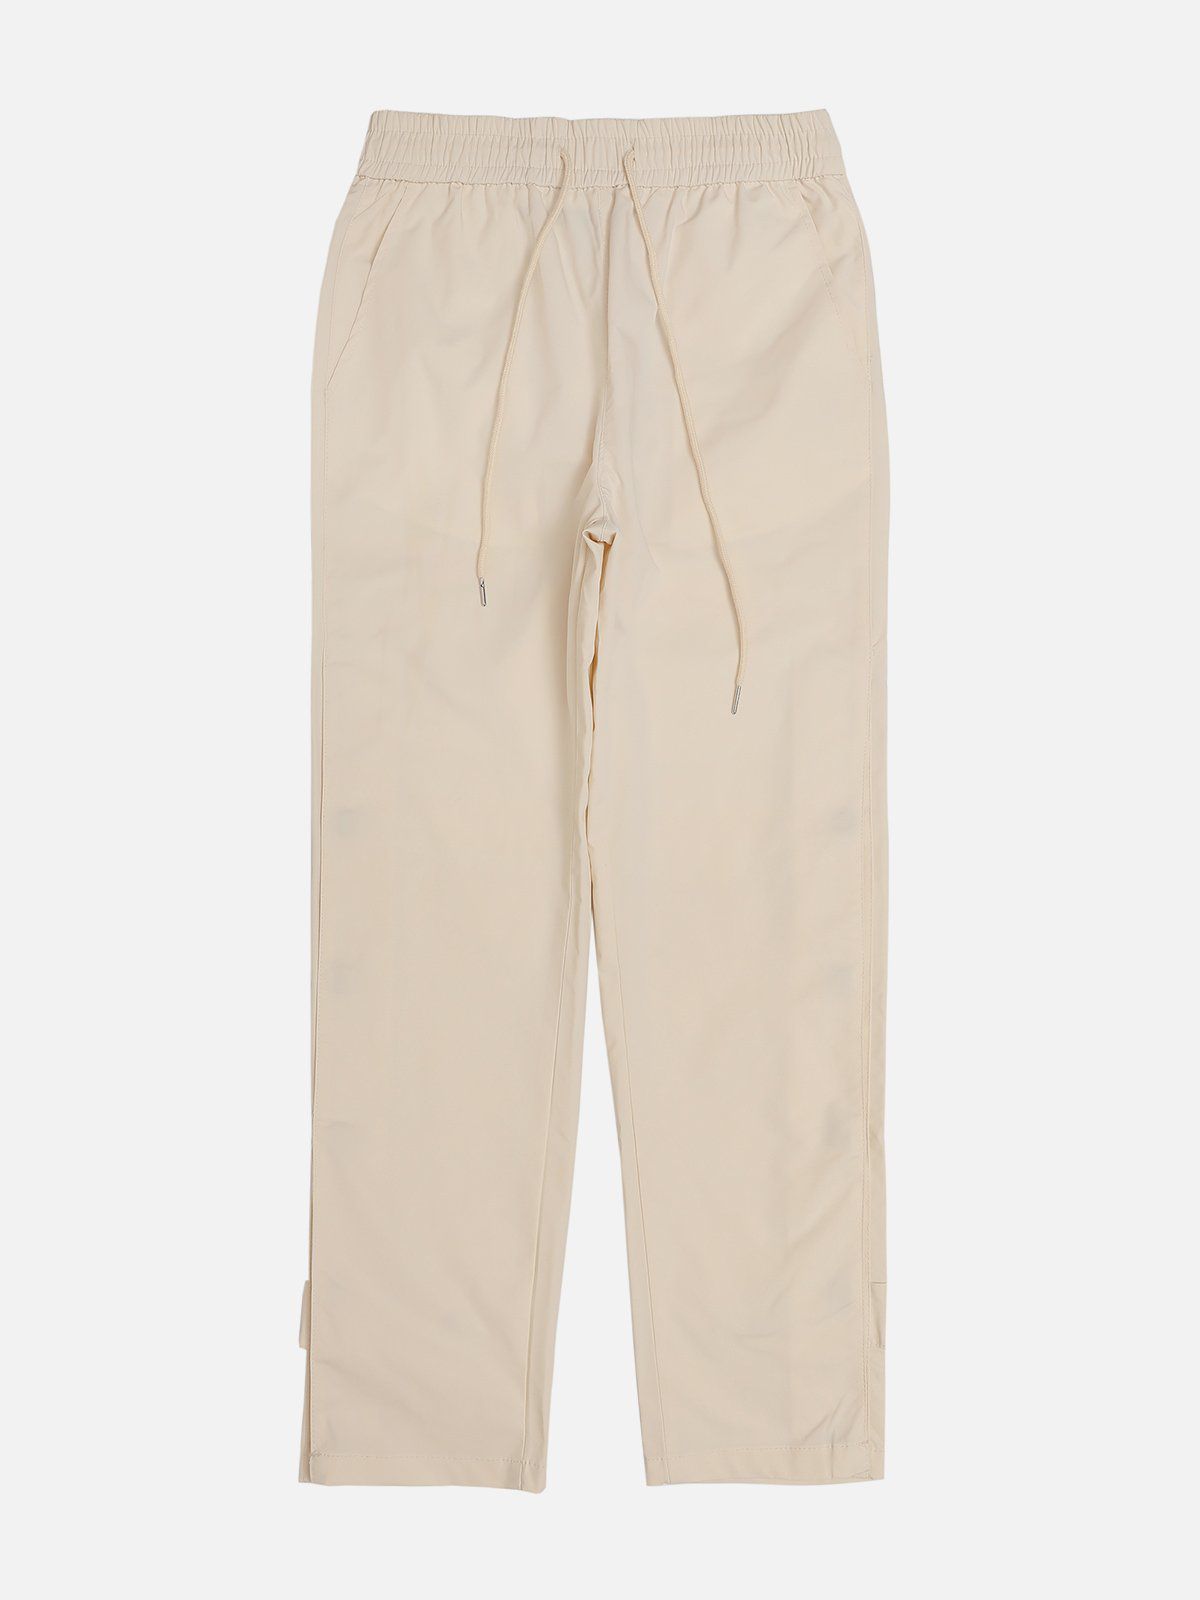 Eprezzy® - Pant Cuff Buttons Pants Streetwear Fashion - eprezzy.com